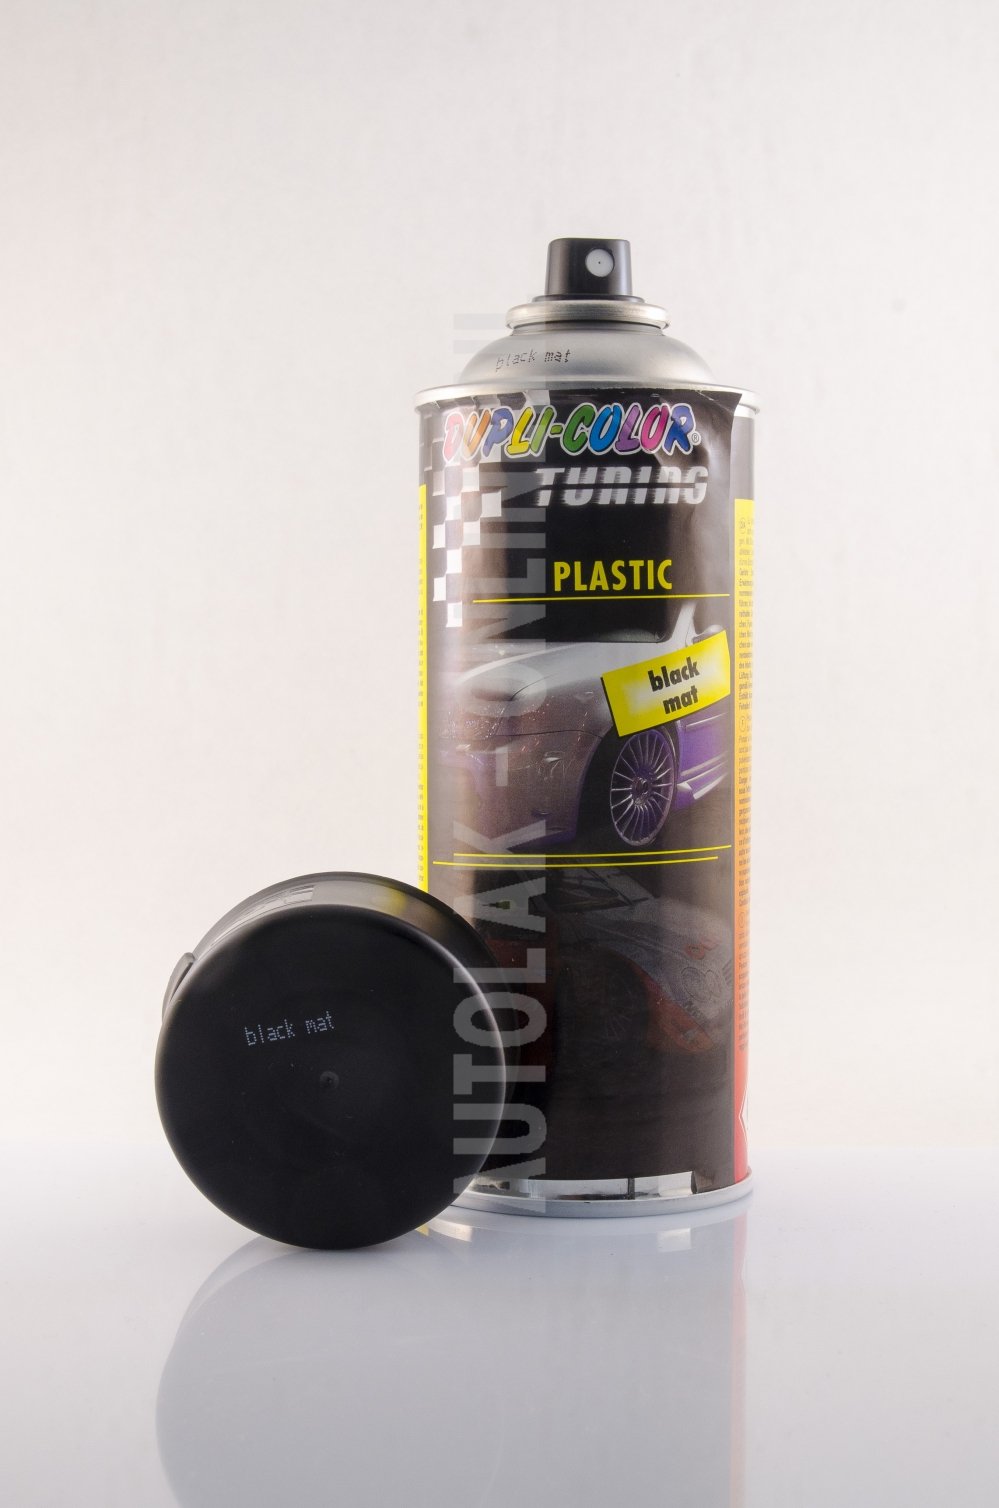 Dollar Slaapkamer Hoofd Bumper spray - plastic lak zwart mat | Autolak-online.nl